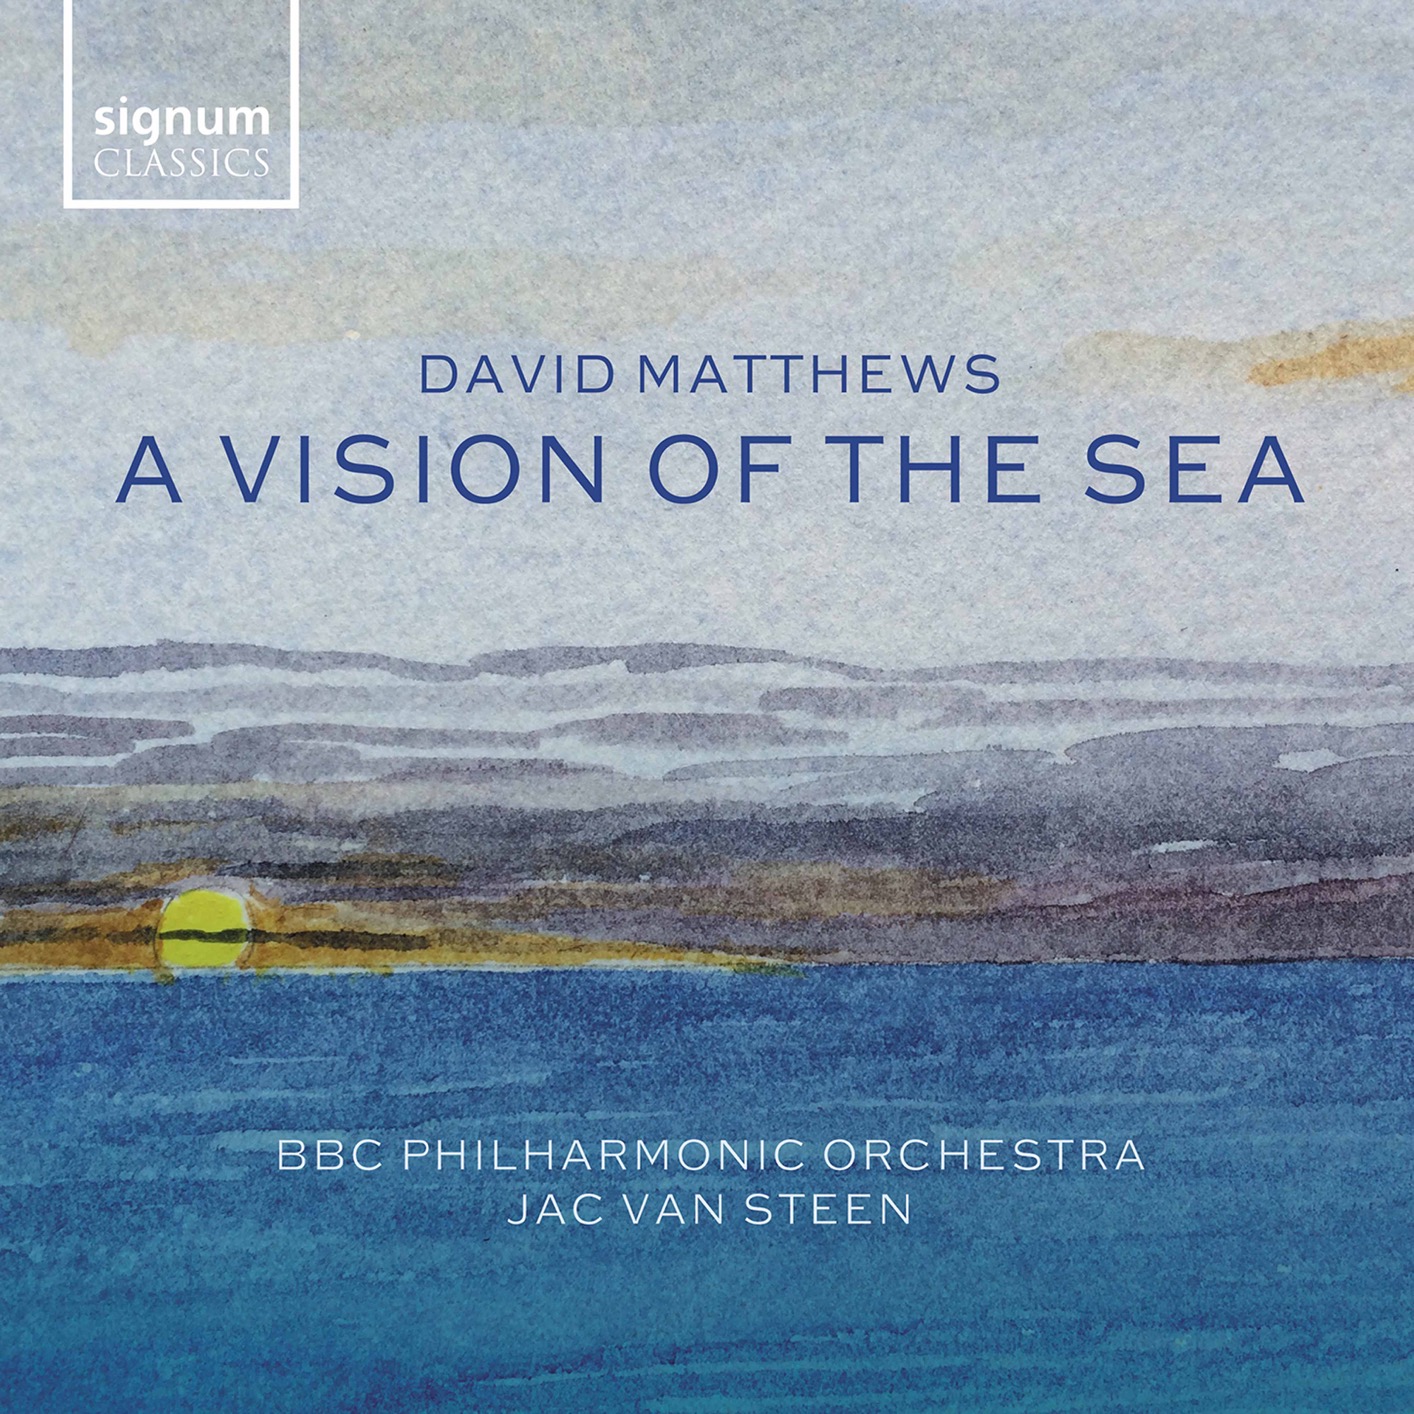 BBC Philharmonic Orchestra & Jac van Steen – David Matthews – A Vision of the Sea (2021) [FLAC 24bit/96kHz]